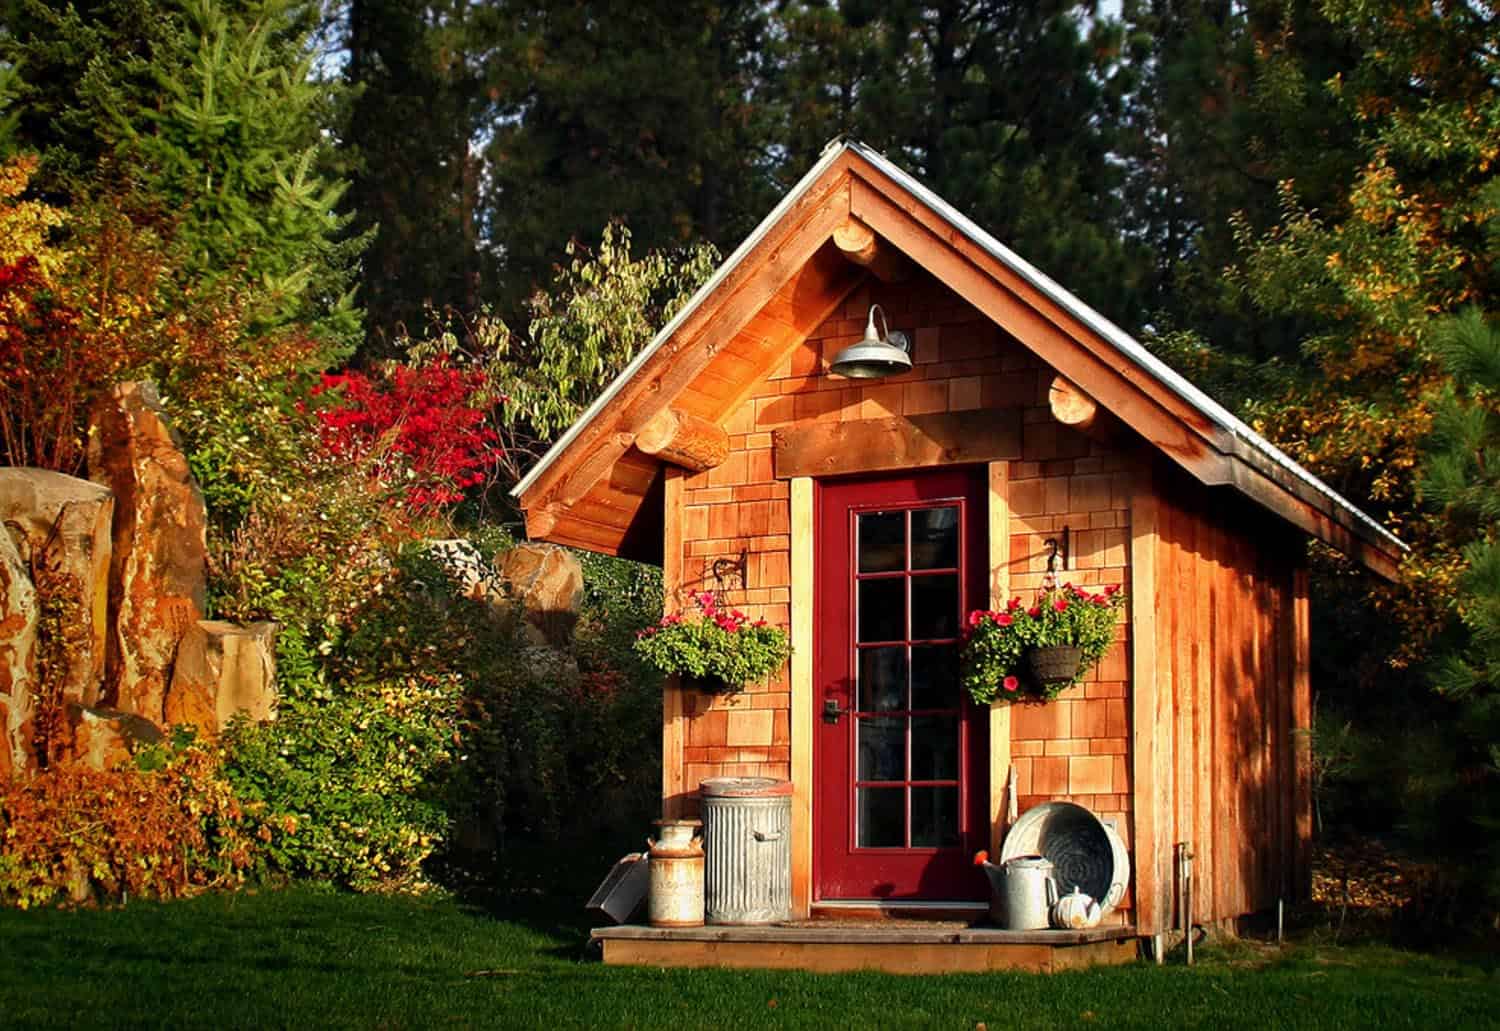 amazing-backyard-garden-shed-ideas-24-1-kindesign_masolata.jpg